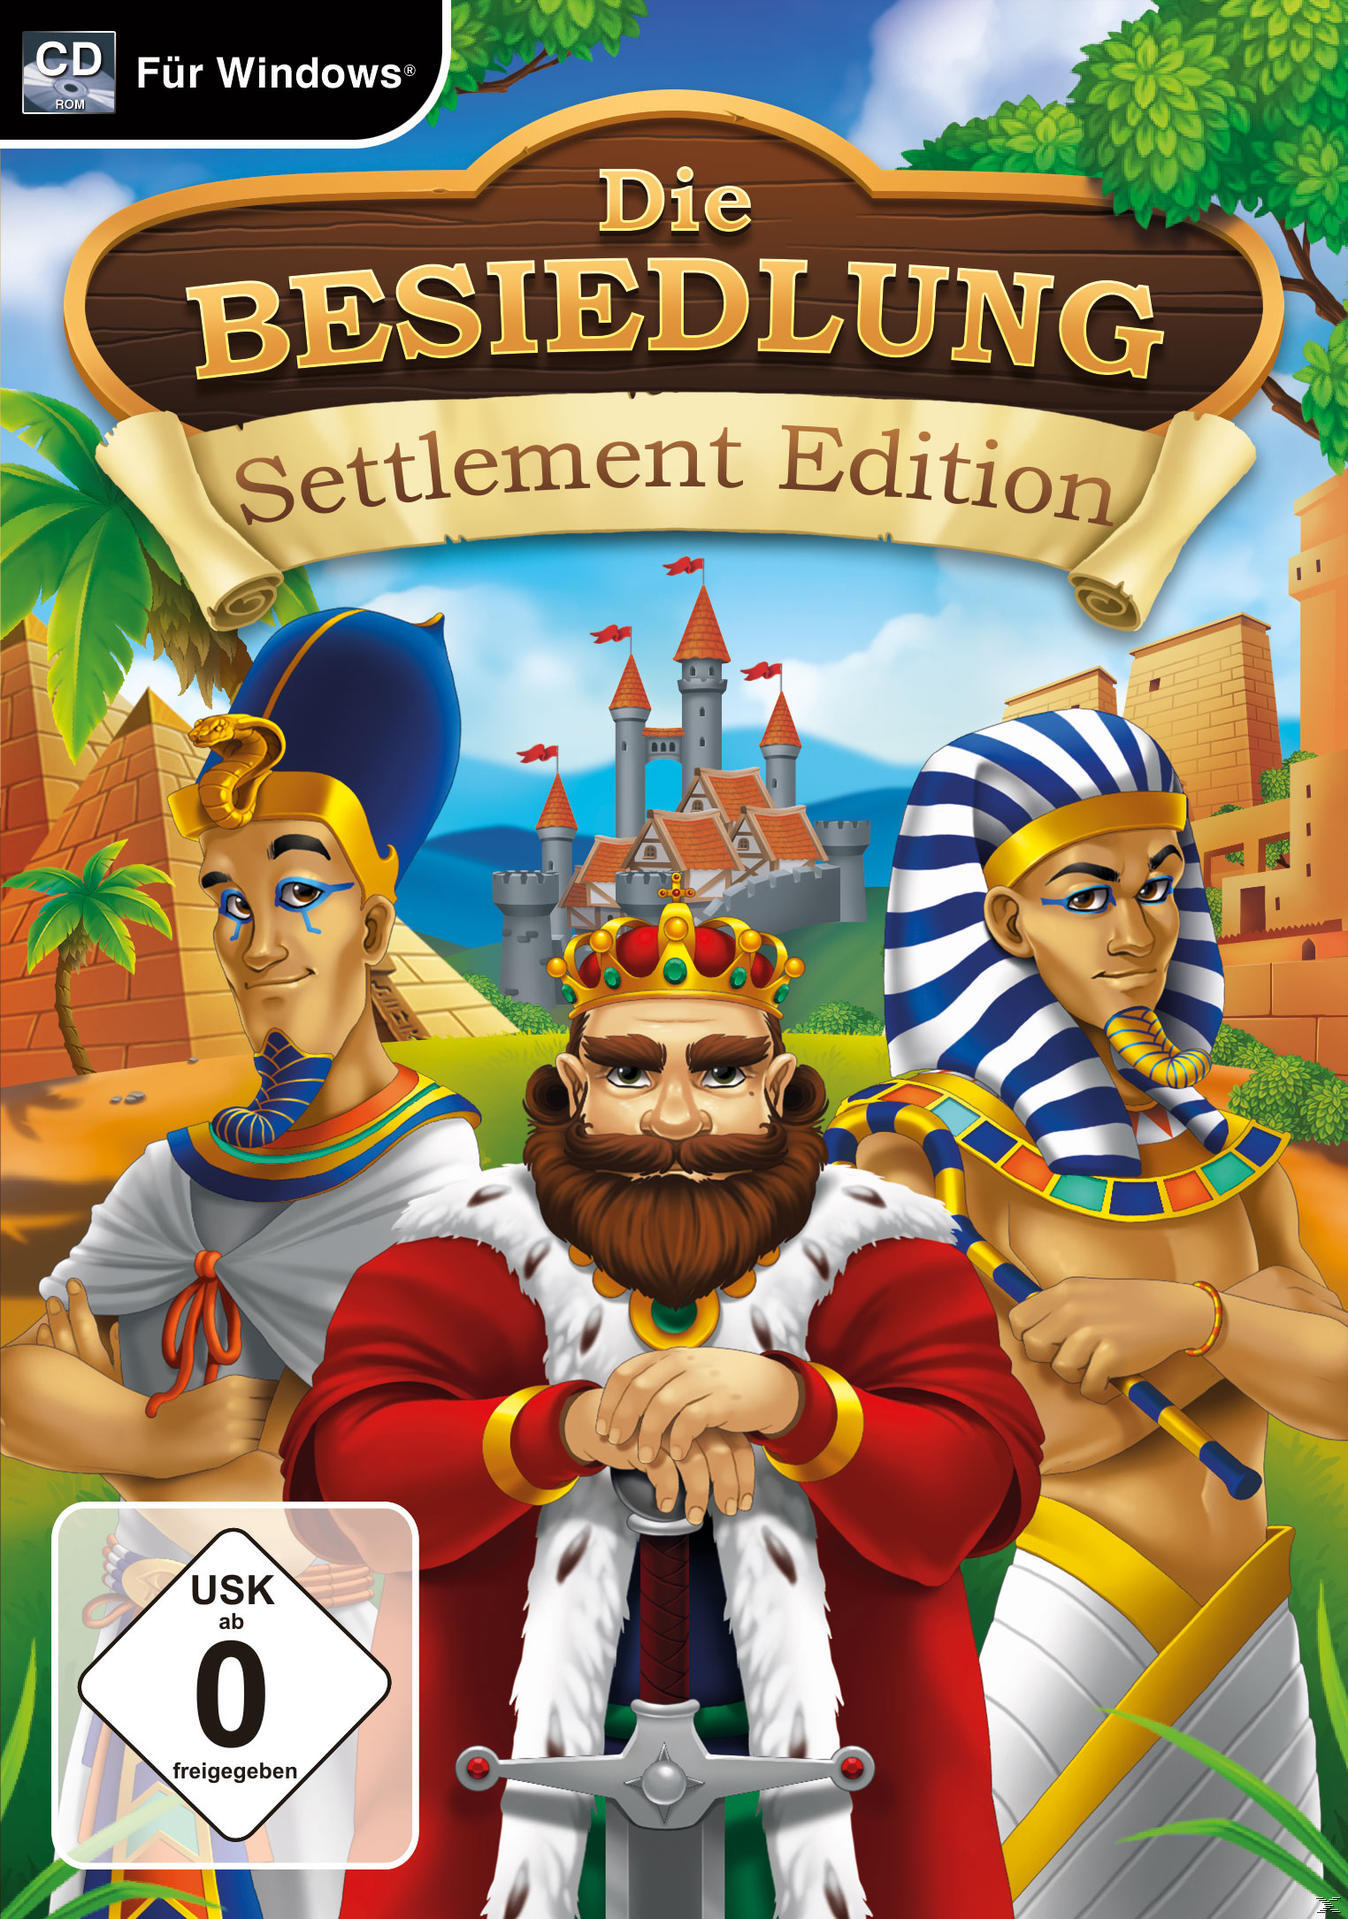 Besiedlung Edition - Die - Settlement [PC]